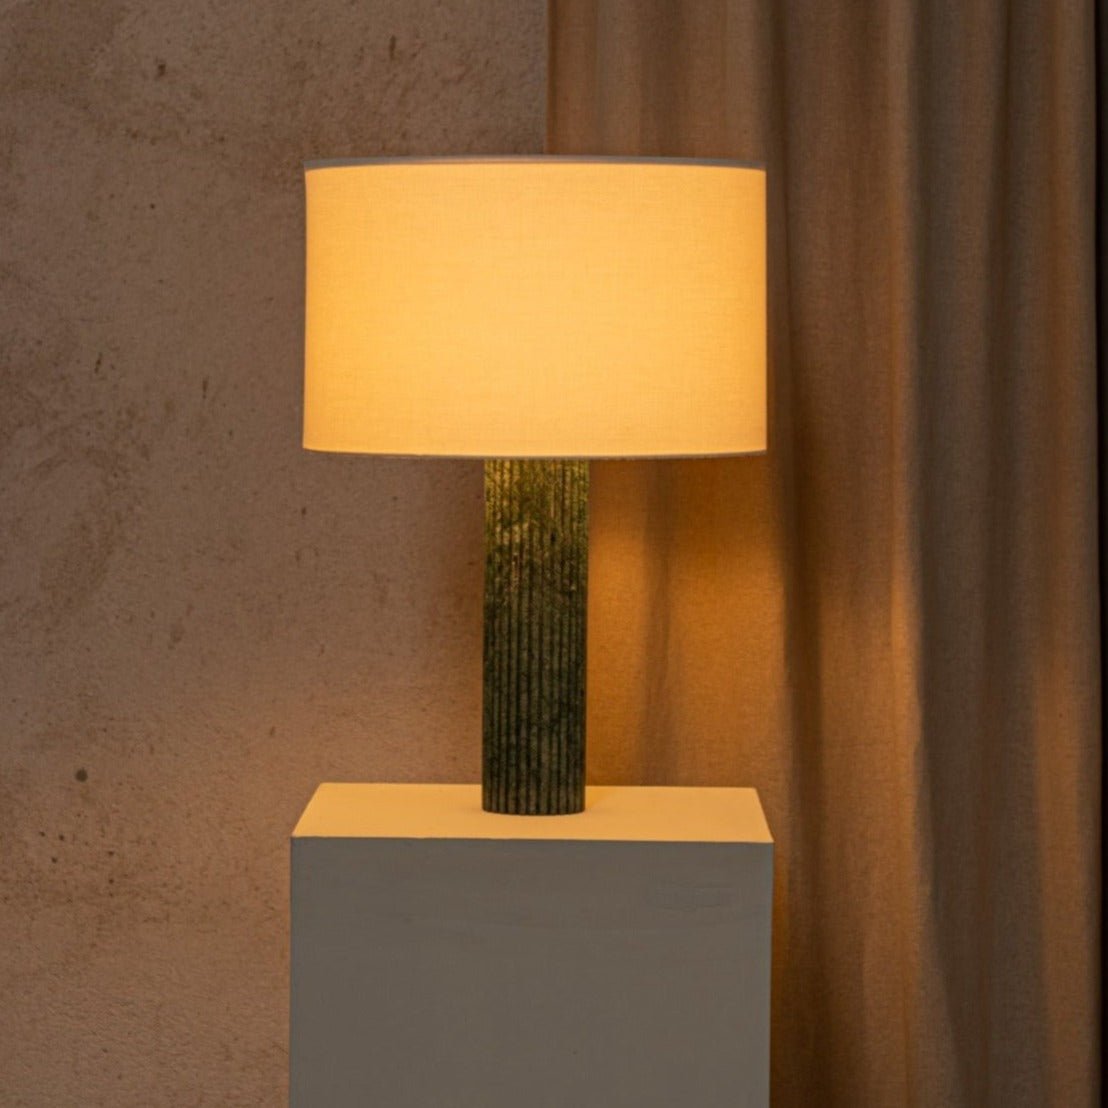 16" Textured Marble Table Lamp, Green, White Cotton Drum (EU or US) - european design luxury luxe designer lighting